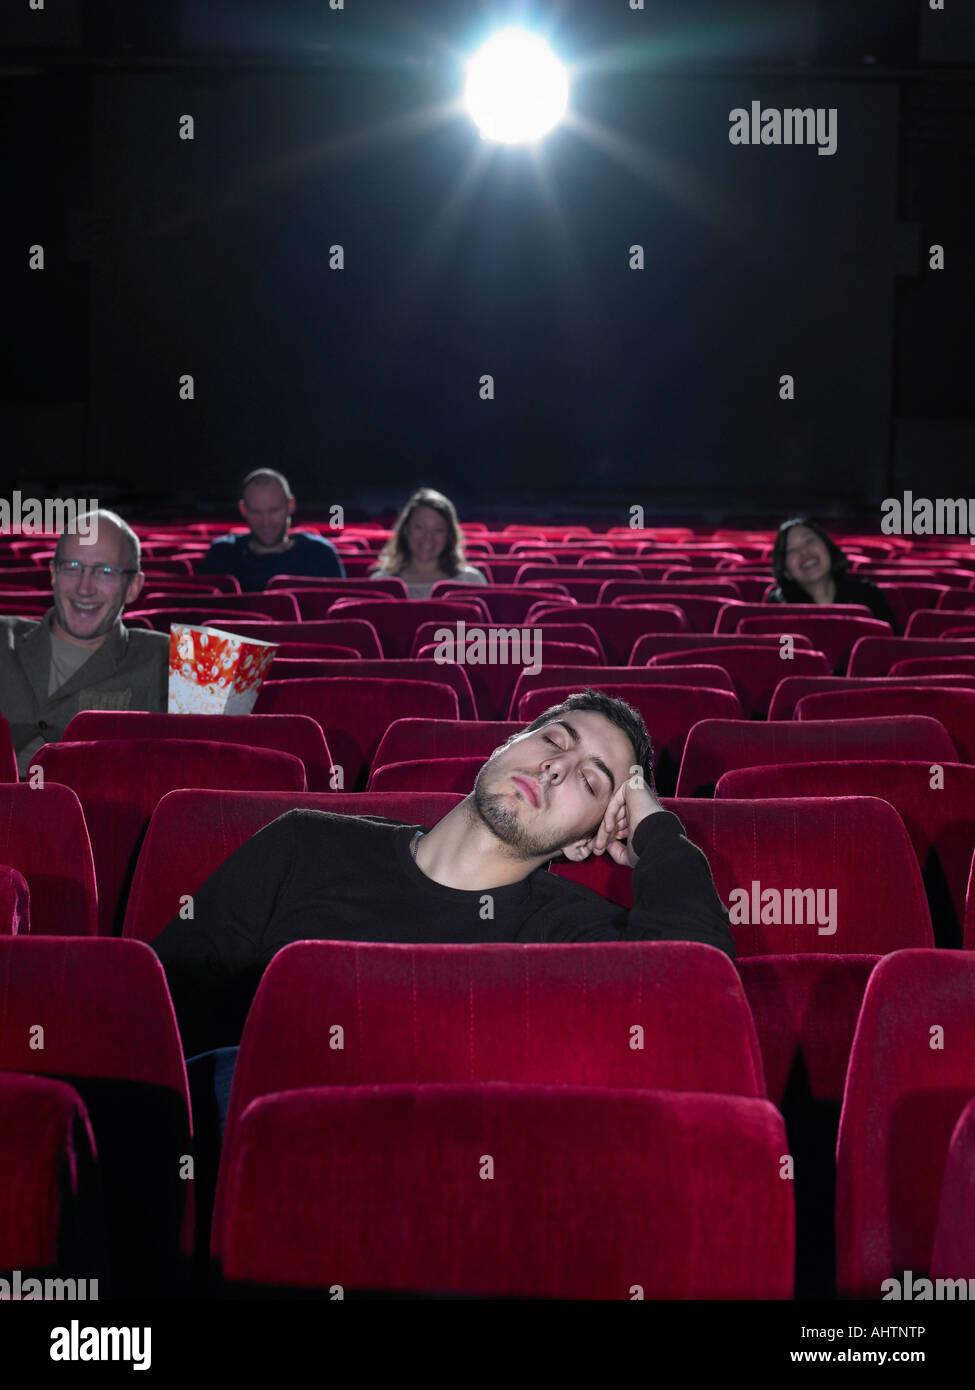 Young man asleep in cinema Stock Photo